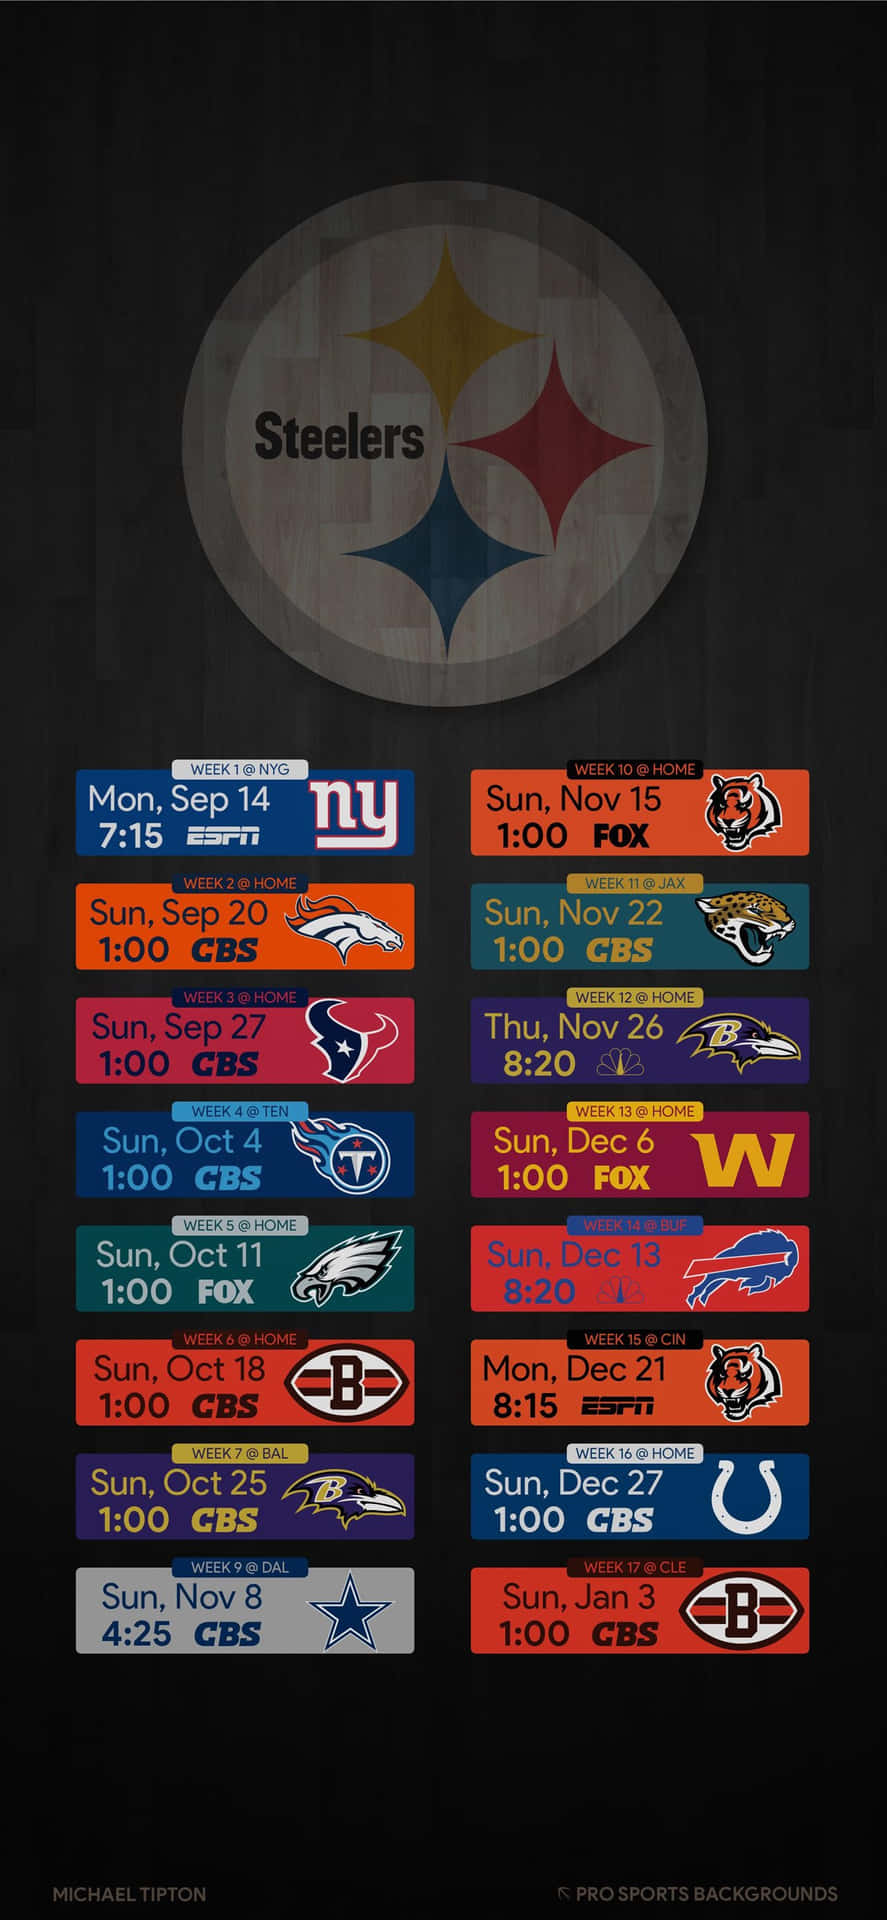 Vis din Steelers-stolthet med en iPhone wallpaper! Wallpaper